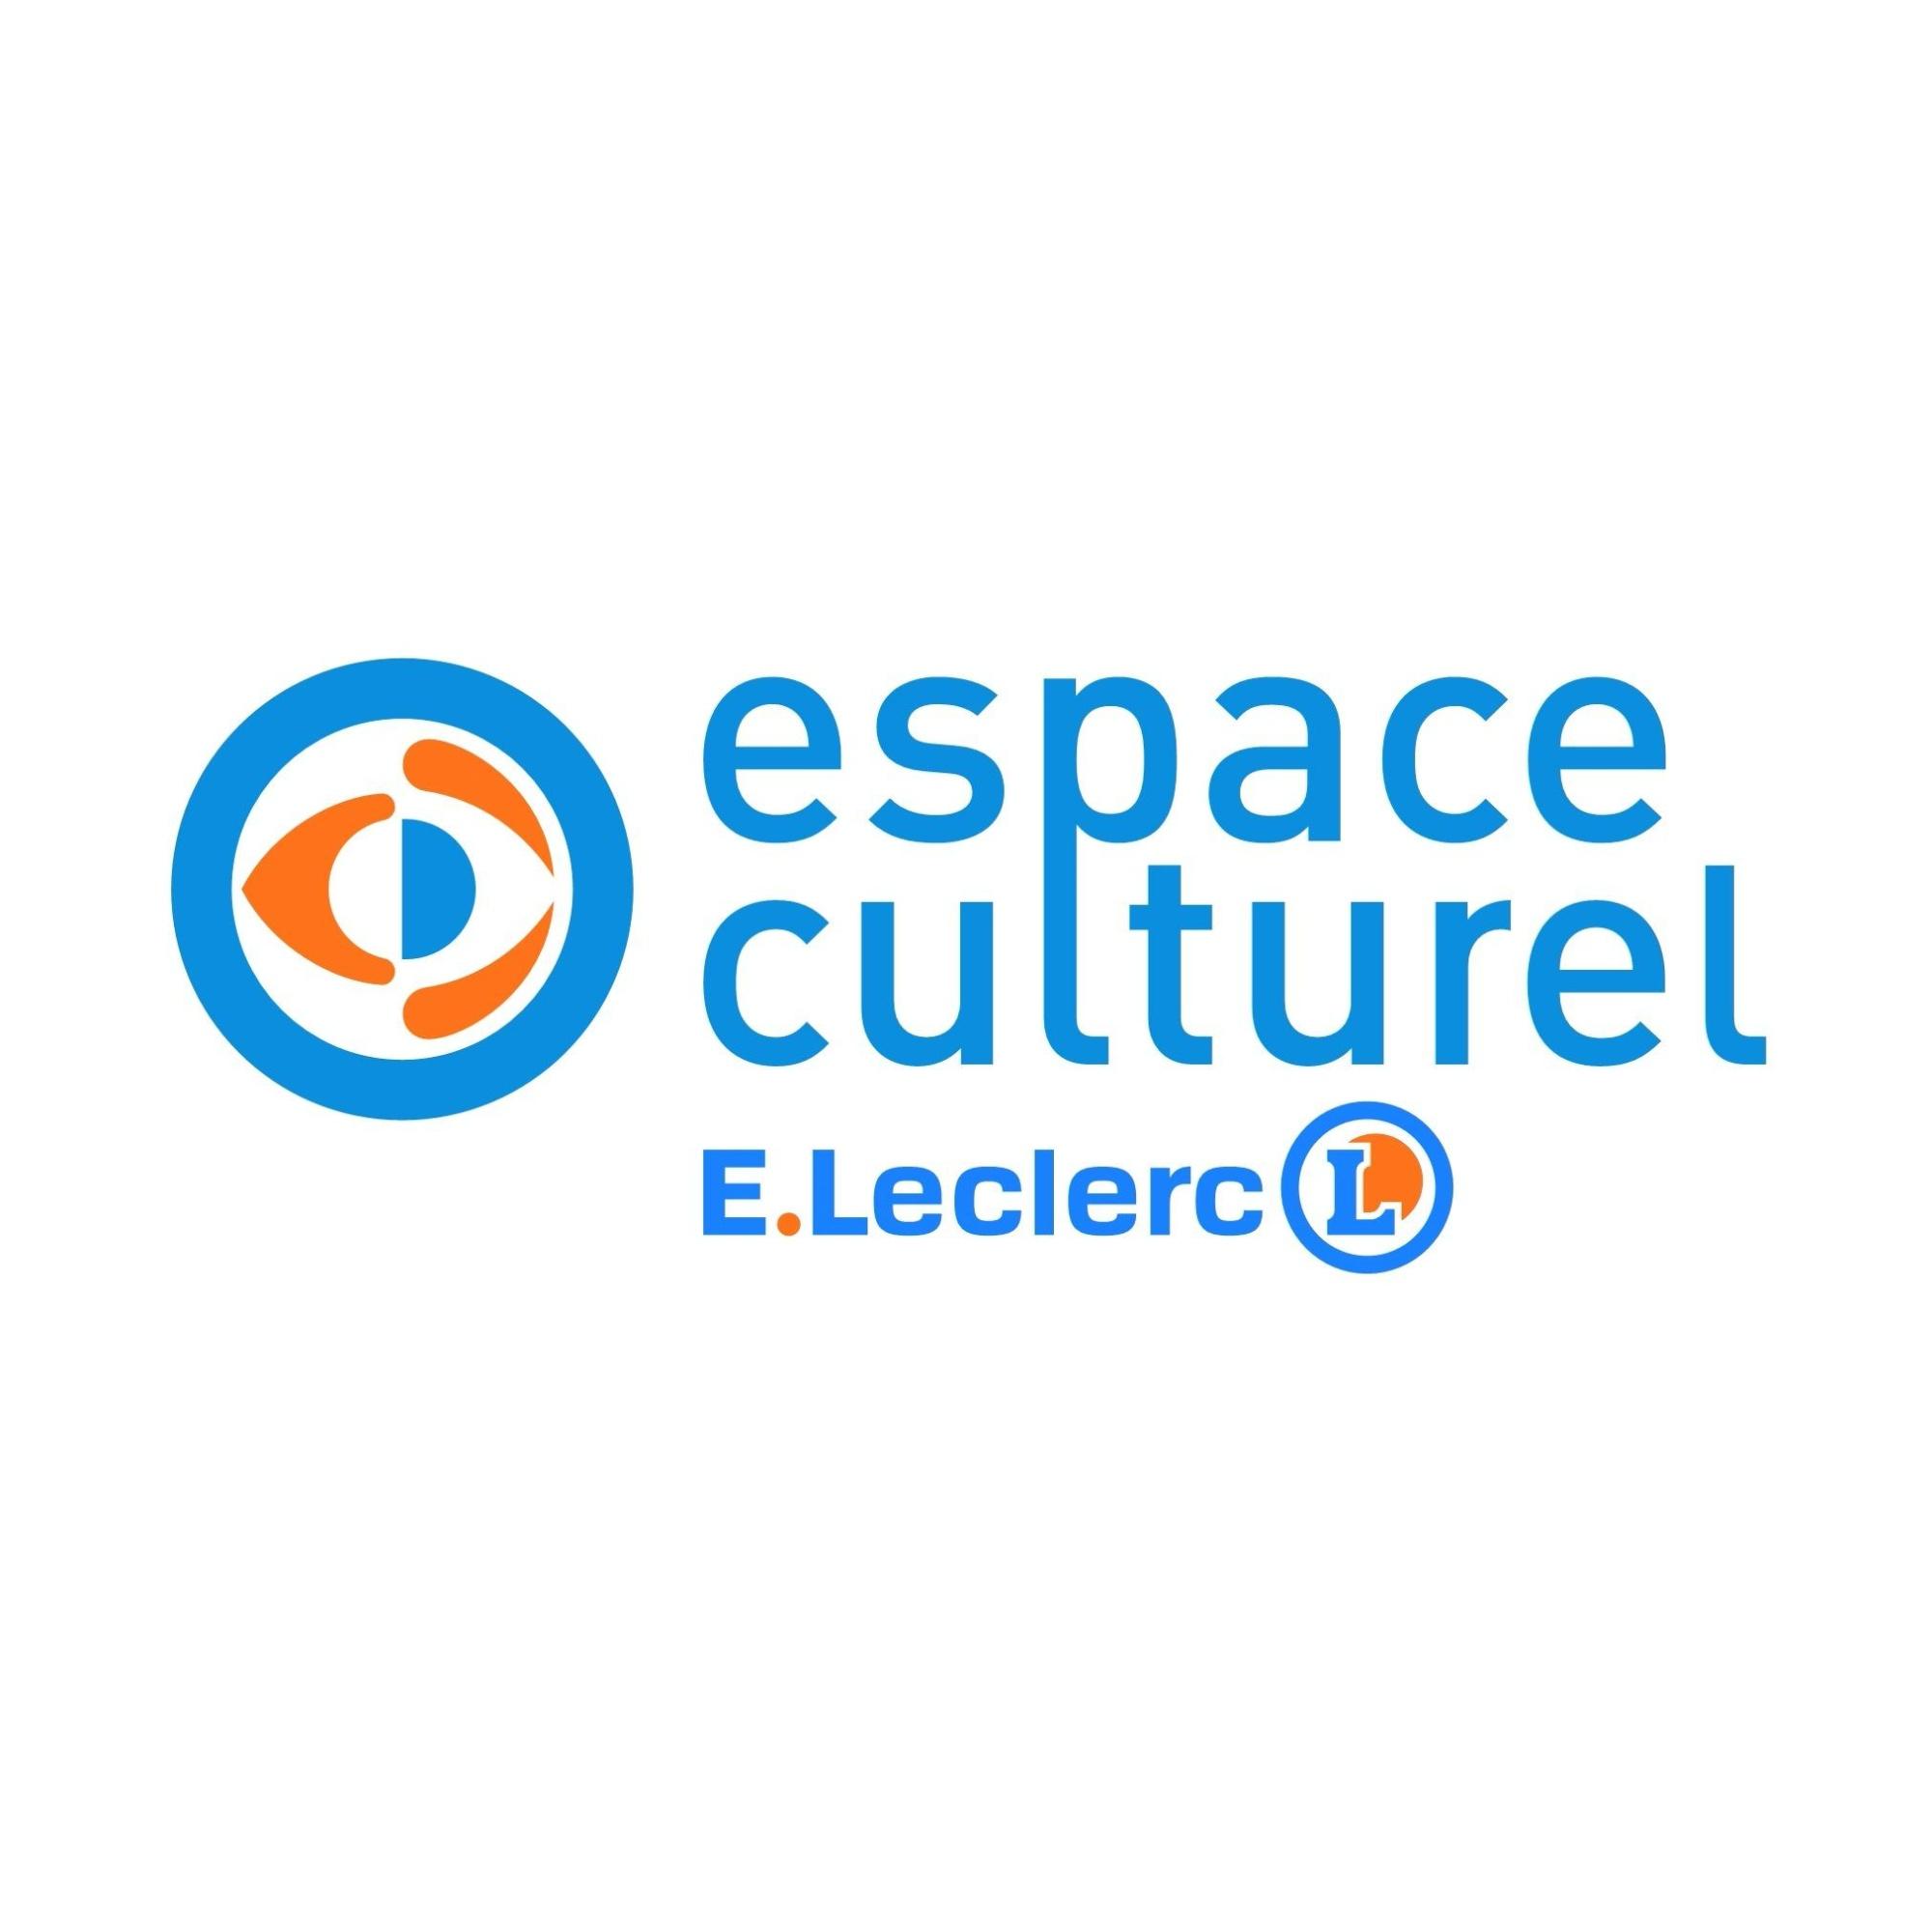 E.leclerc Espace Culturel Vernon